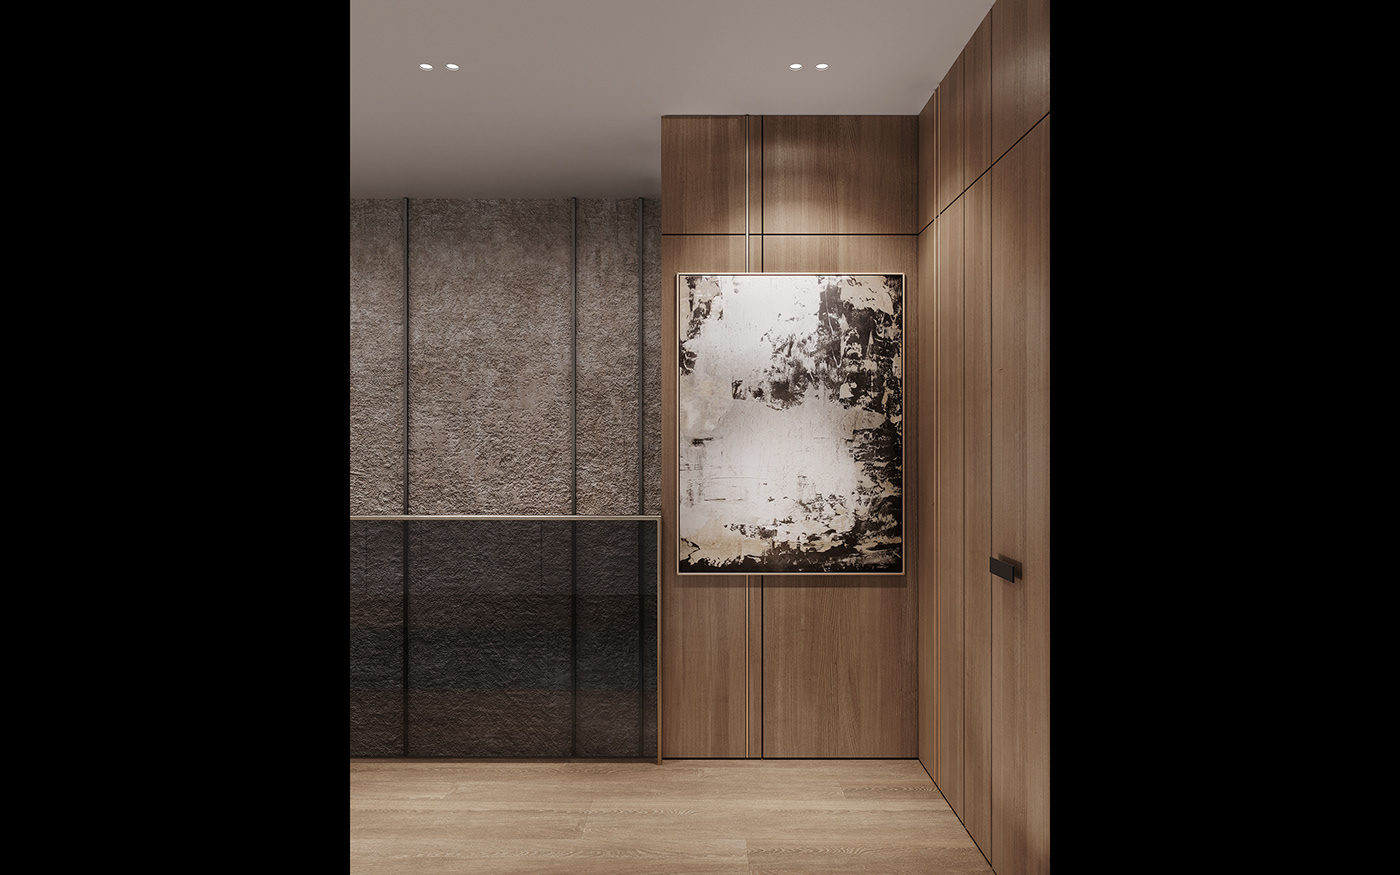 3ds max corona render  inspiration interior design  kitchen design living room visualization